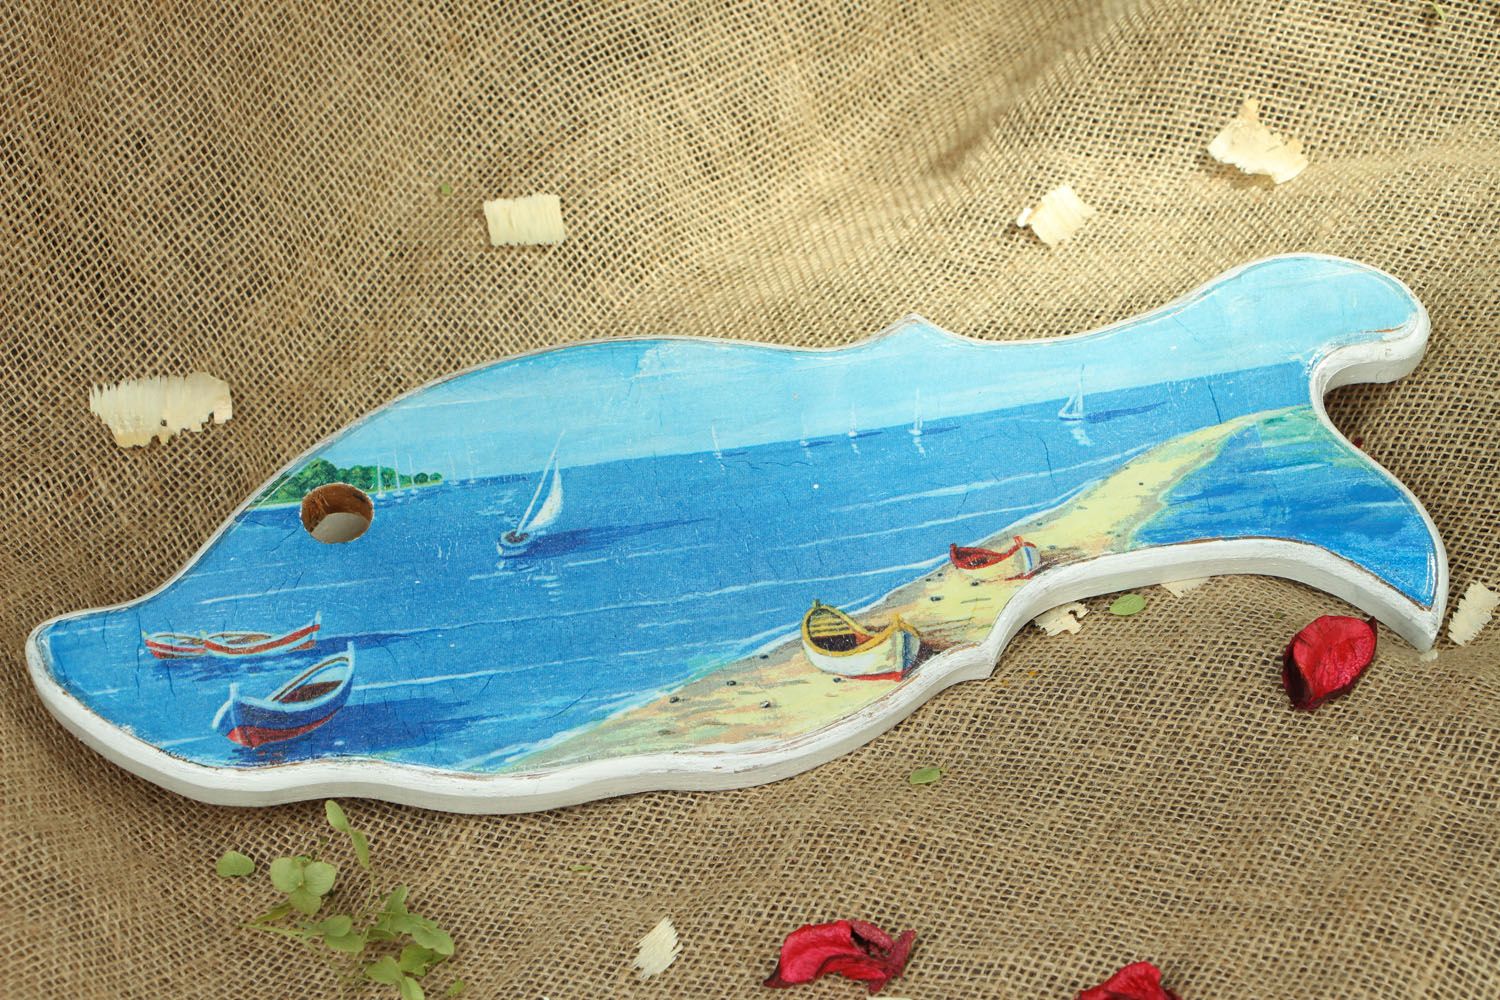 Fish-shaped cutting board photo 5